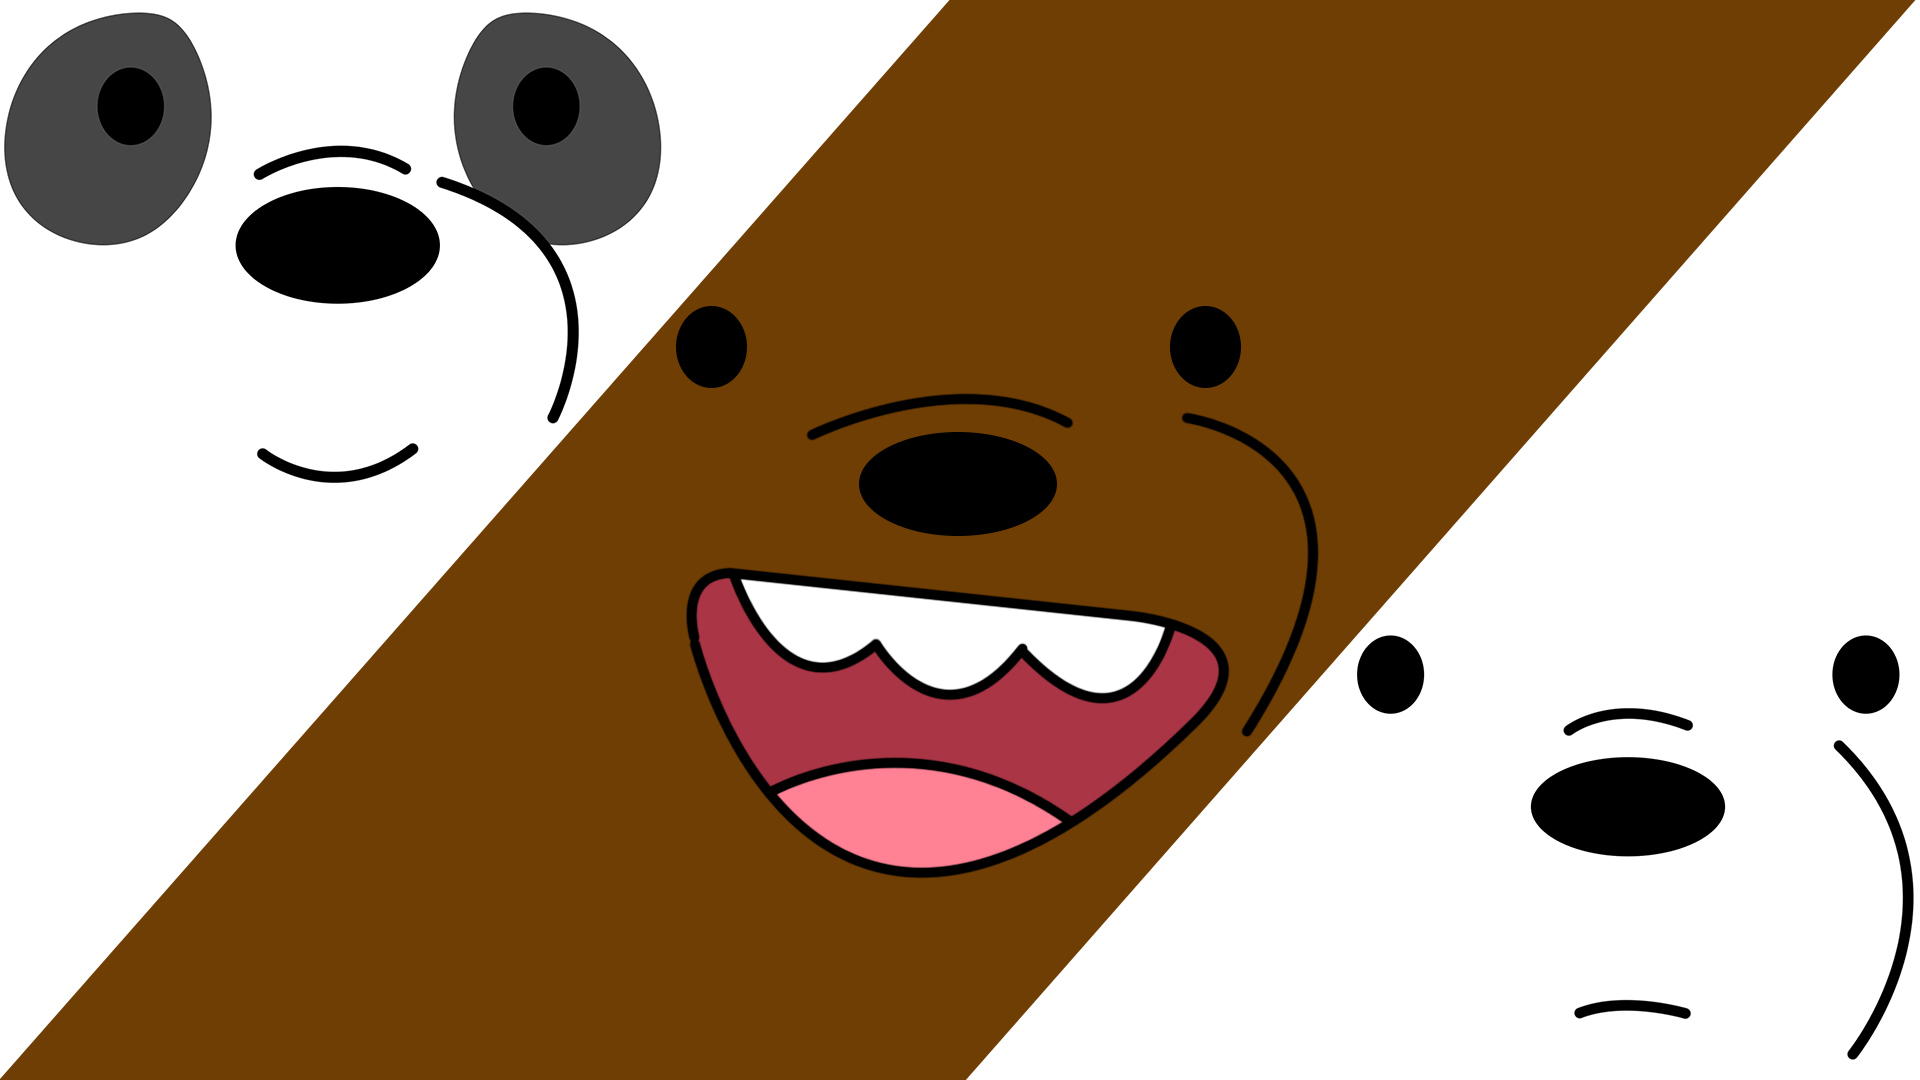  We  Bare  Bears  Cartoon Wallpapers  HD  Desktop and Mobile 